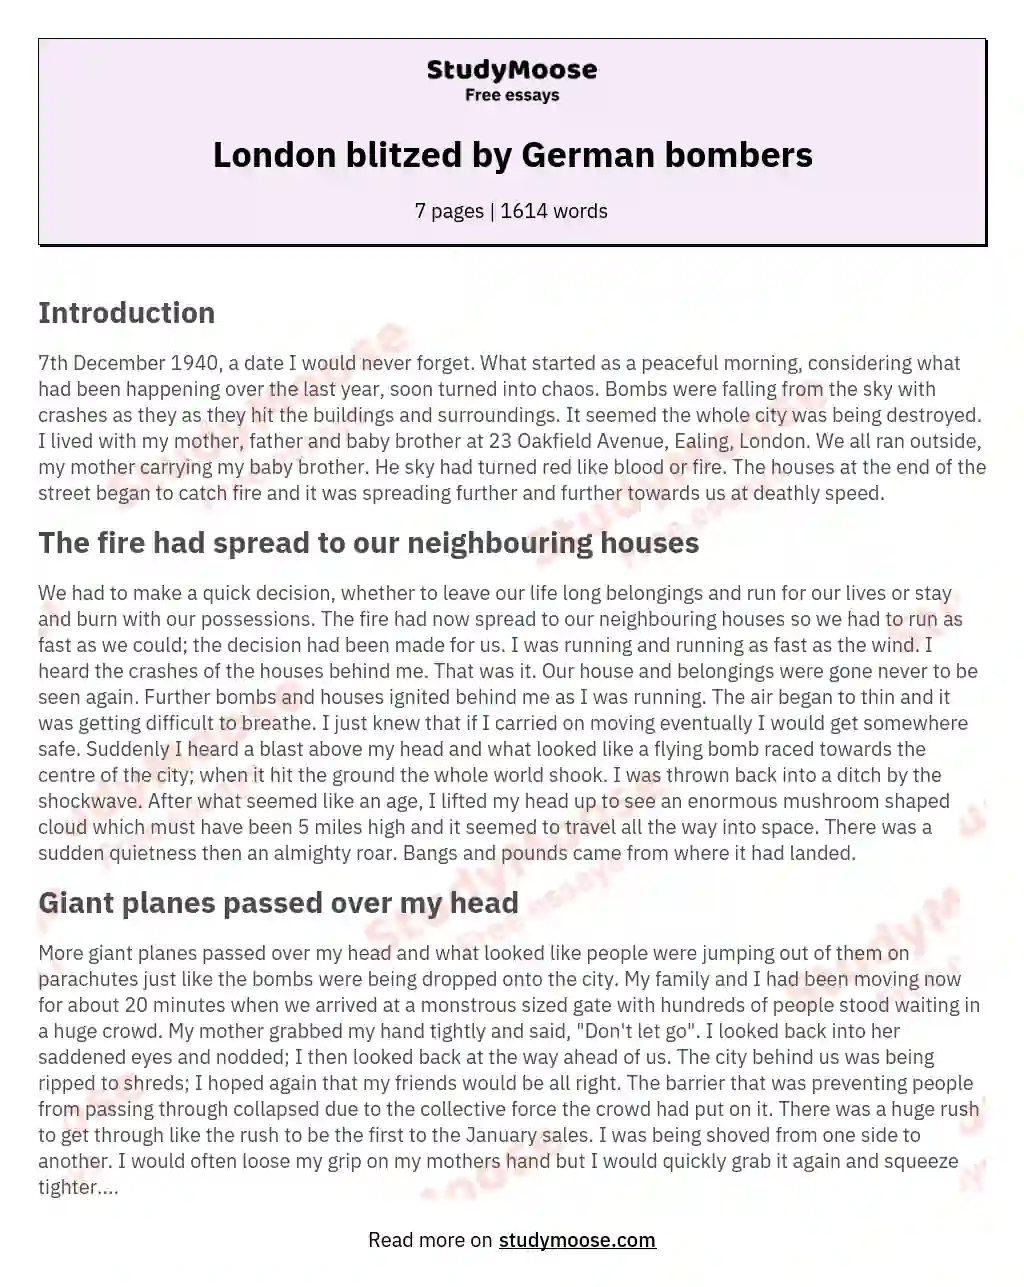 London blitzed by German bombers essay